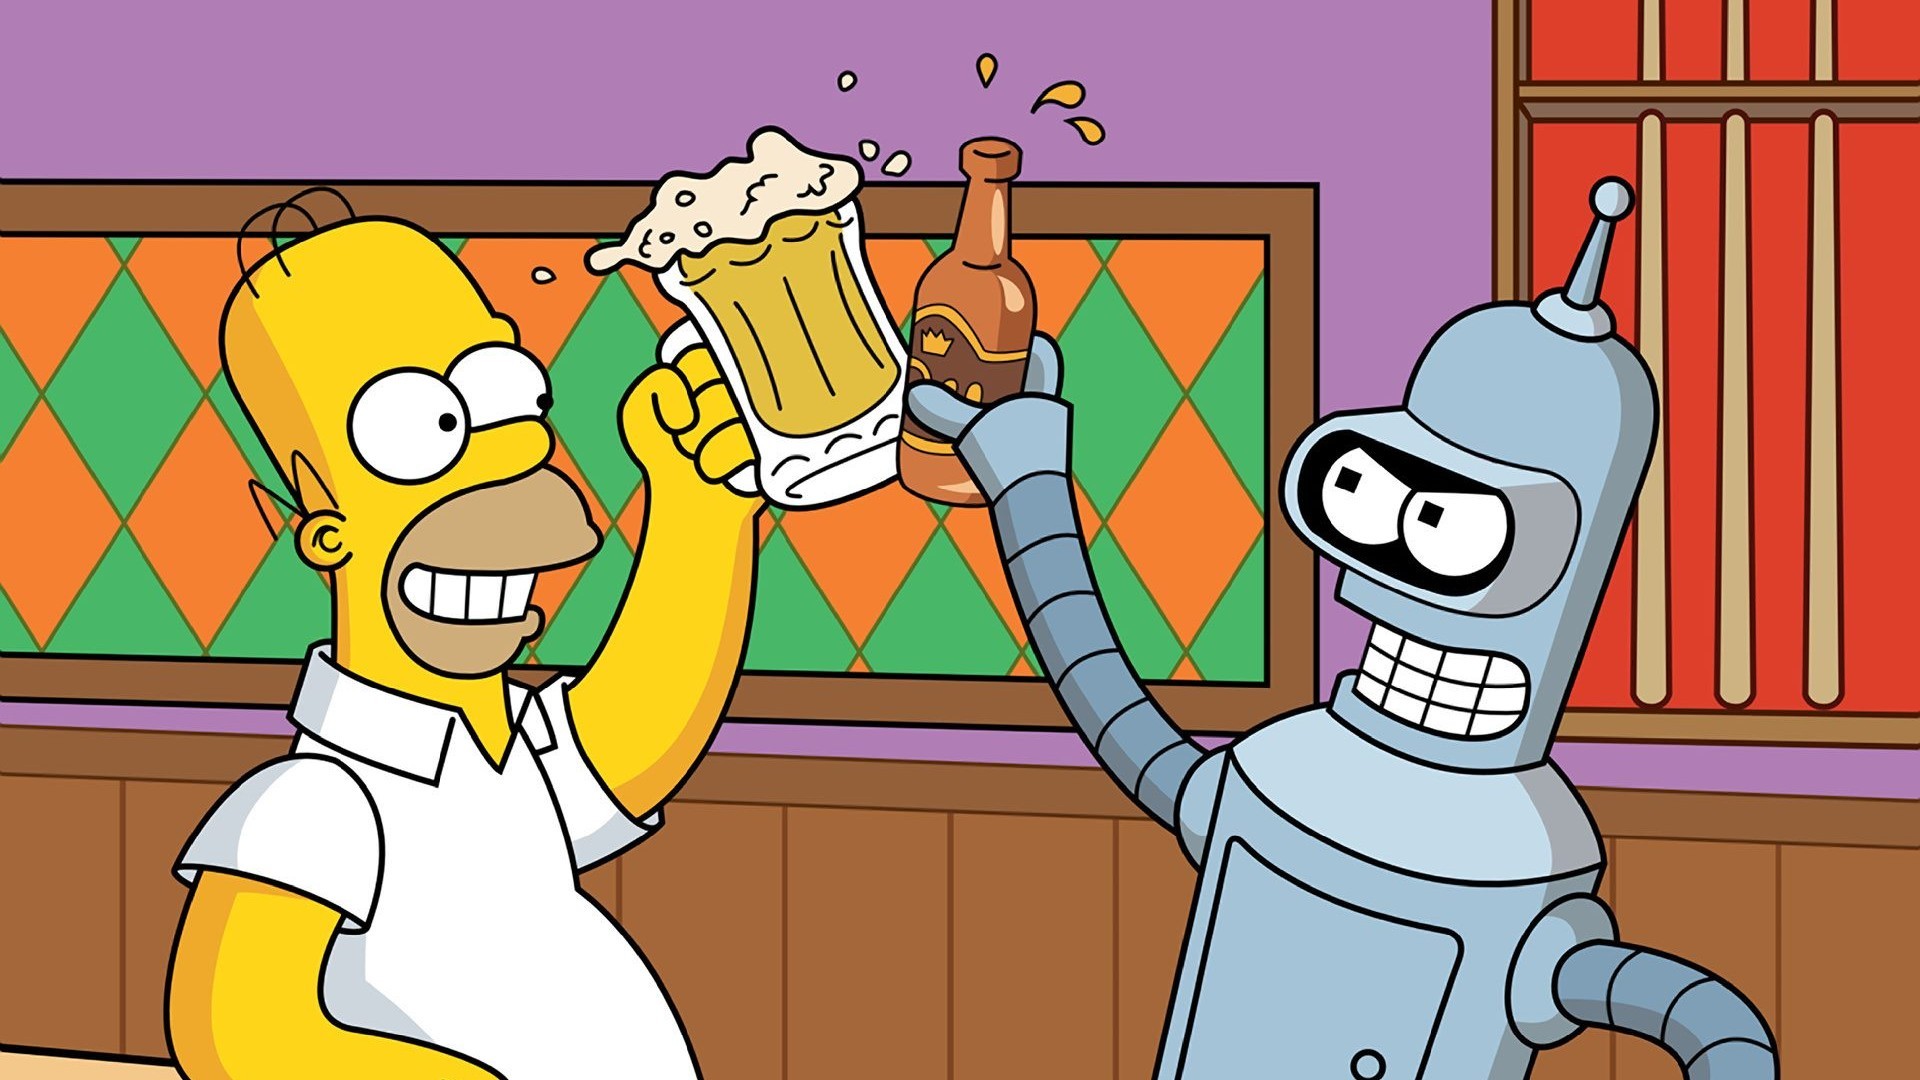 22297-The_Simpsons-Homer_Simpson-Bender-Futurama.jpg